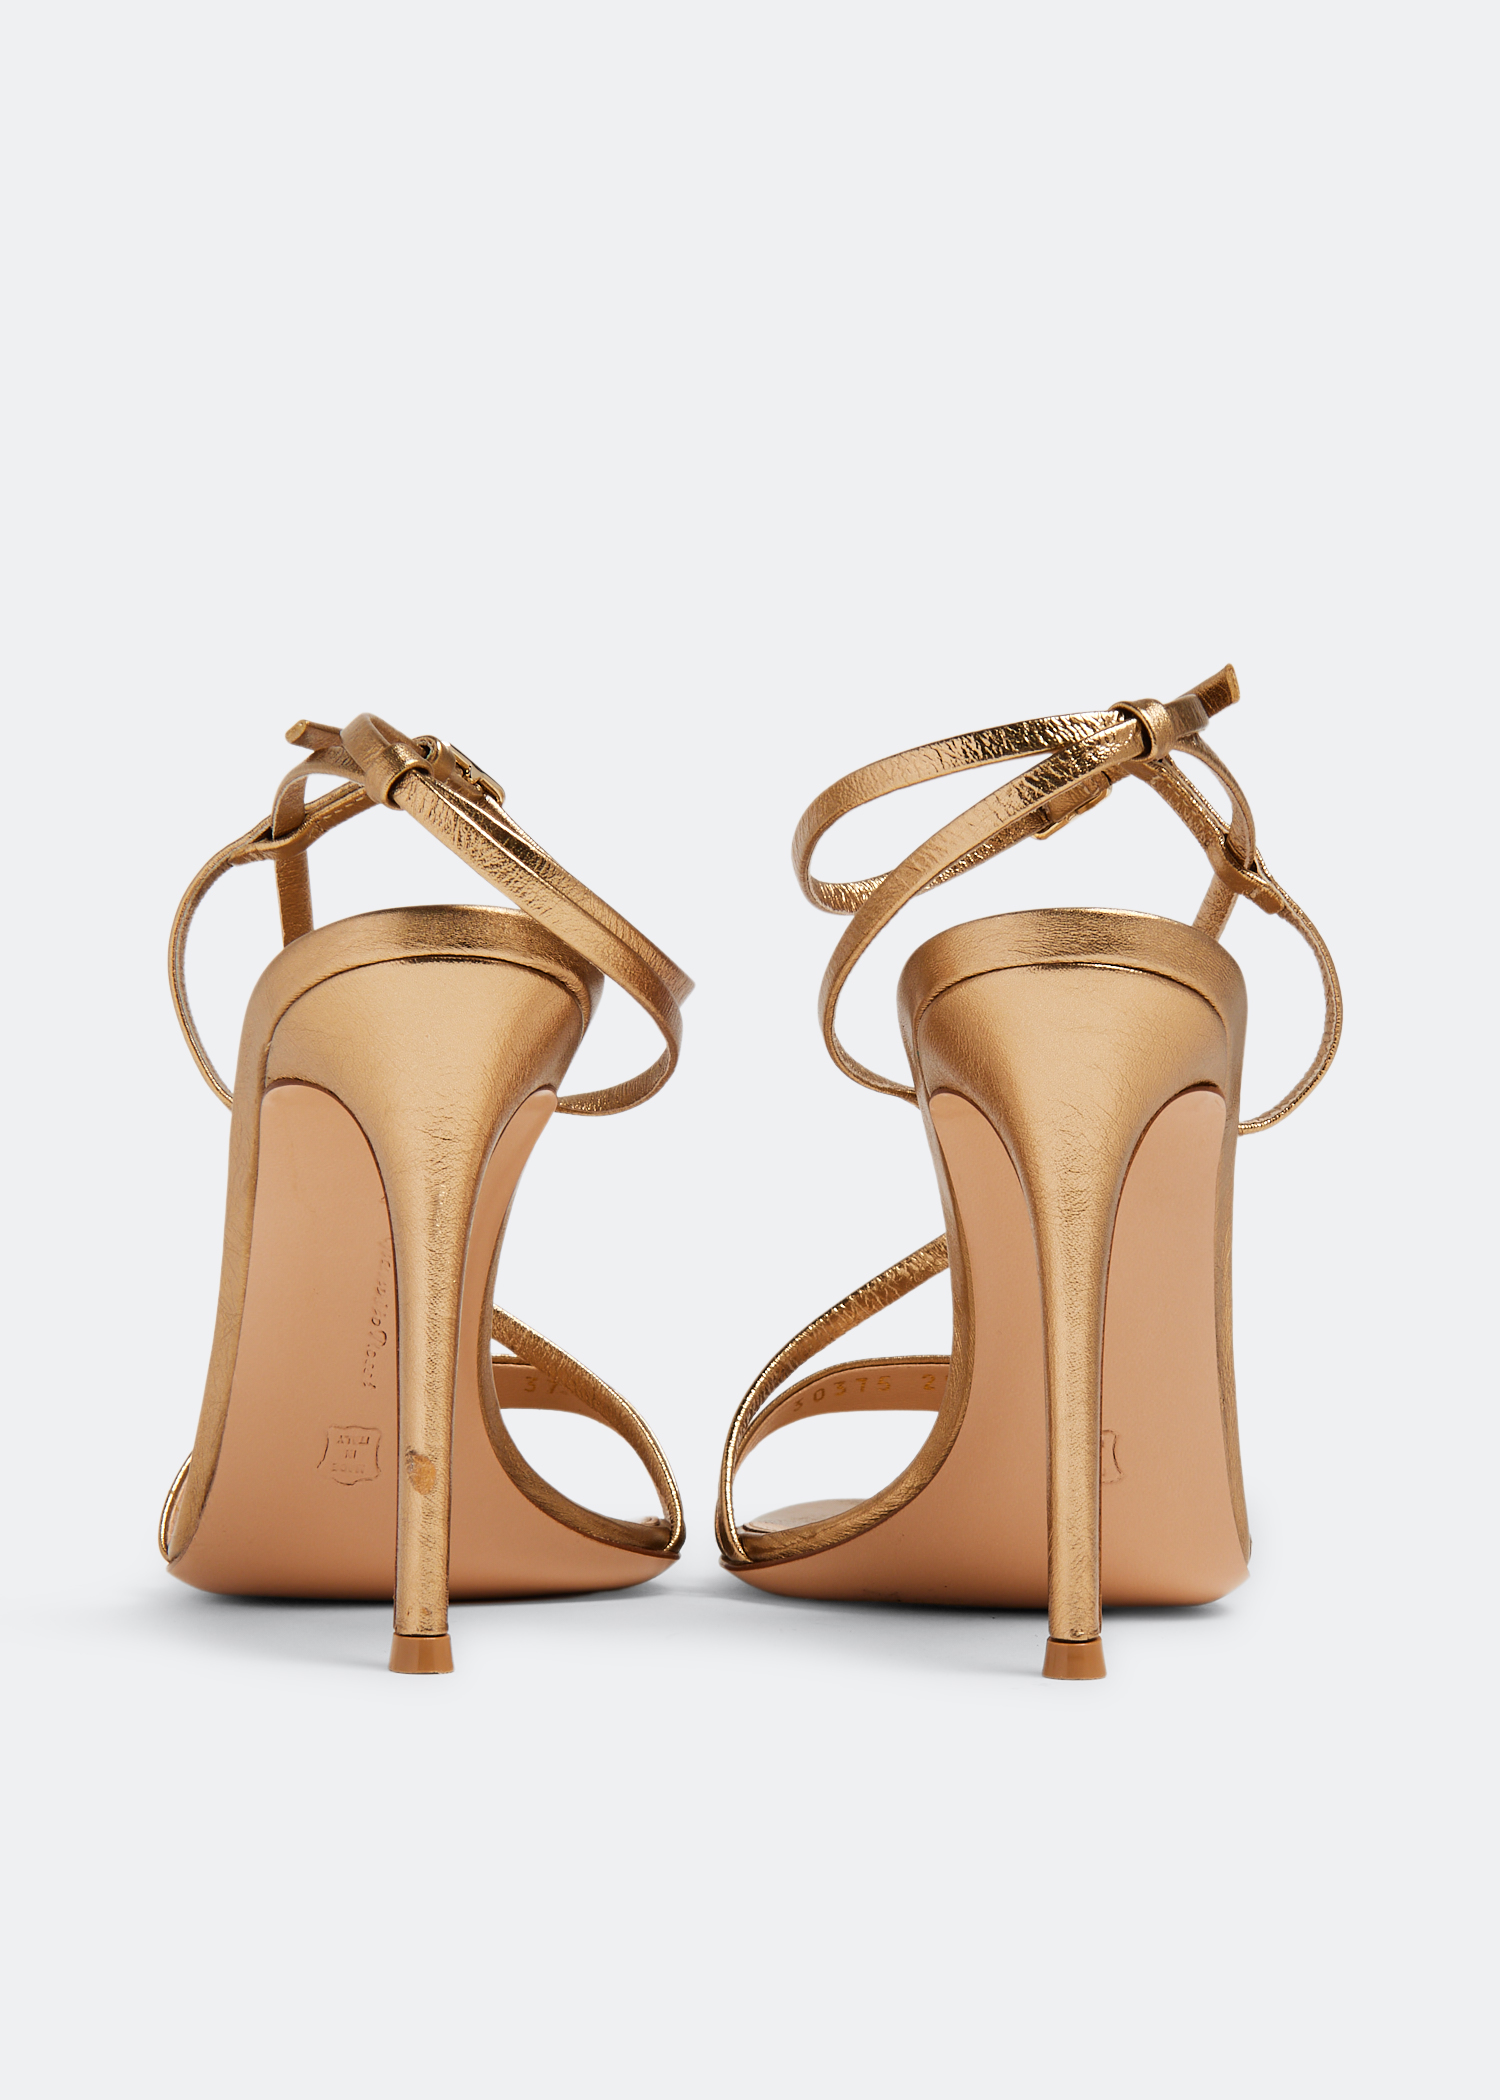 Gianvito Rossi Pre-Loved Manhattan sandals for Women - Gold in KSA 